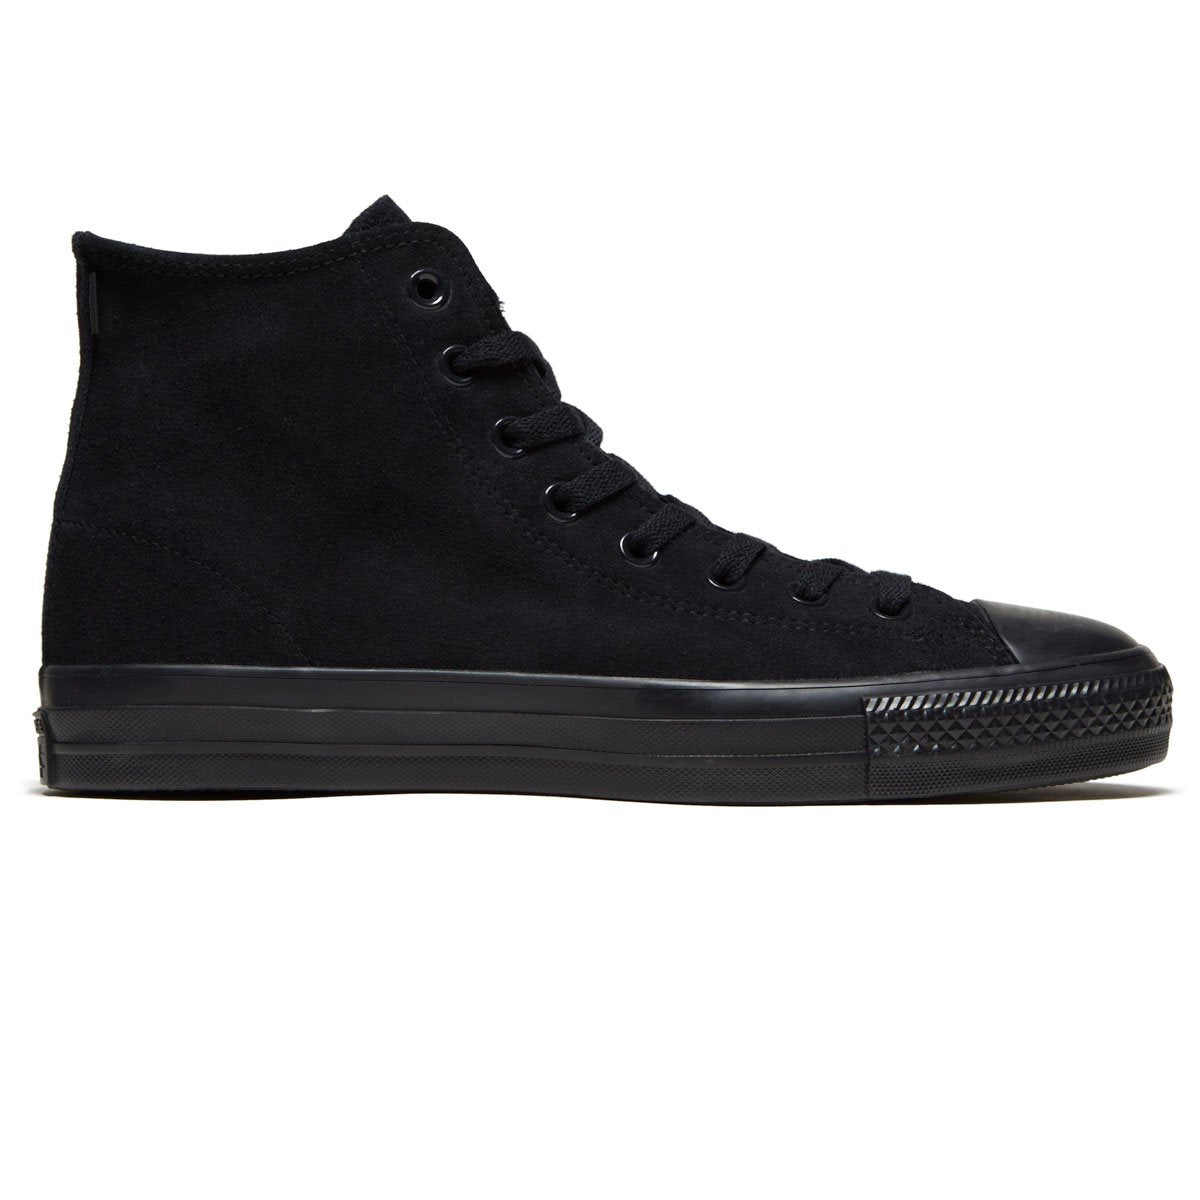 Converse Chuck Taylor All Star Pro Hi Shoes - Black/Black/Black image 1